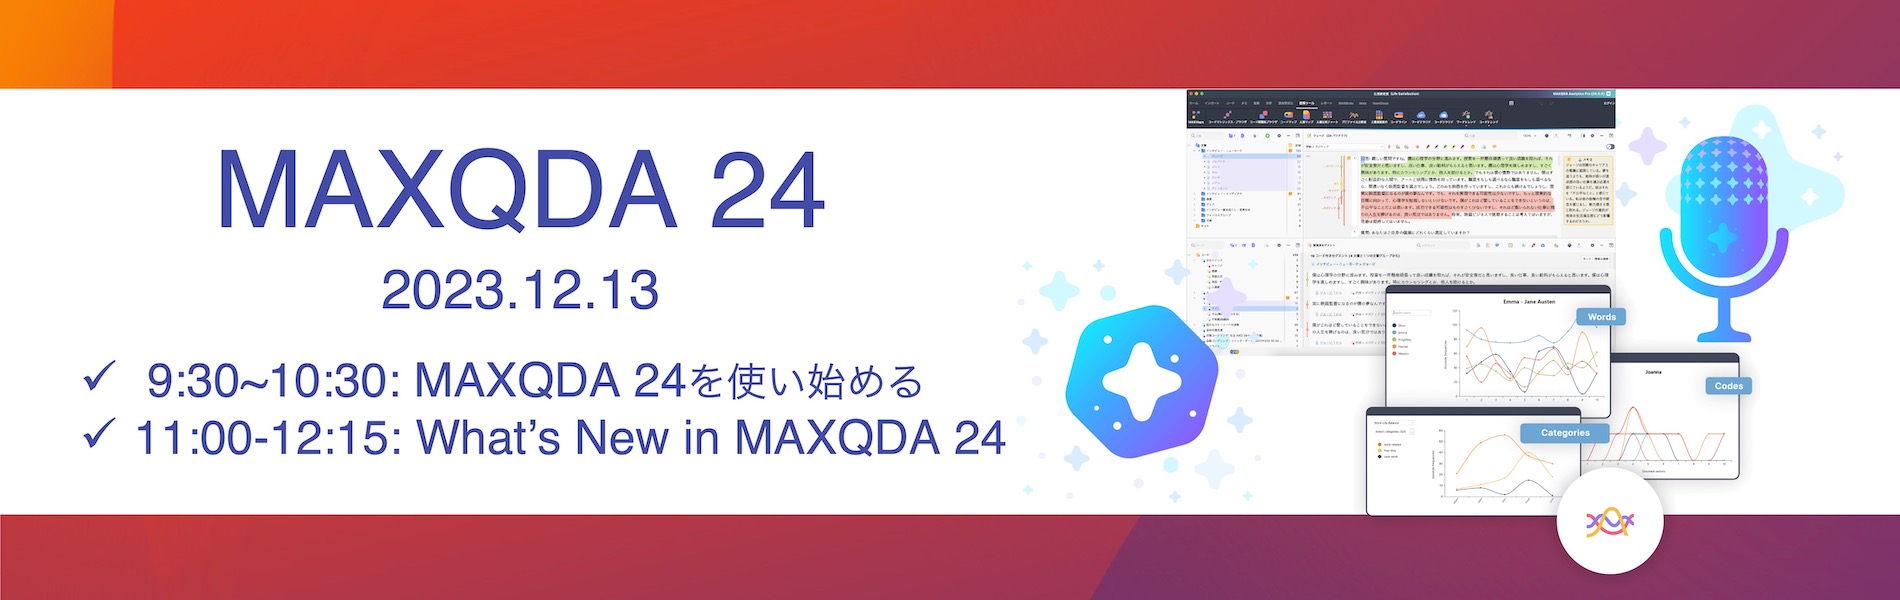 MAXQDA 24 Free Webinars